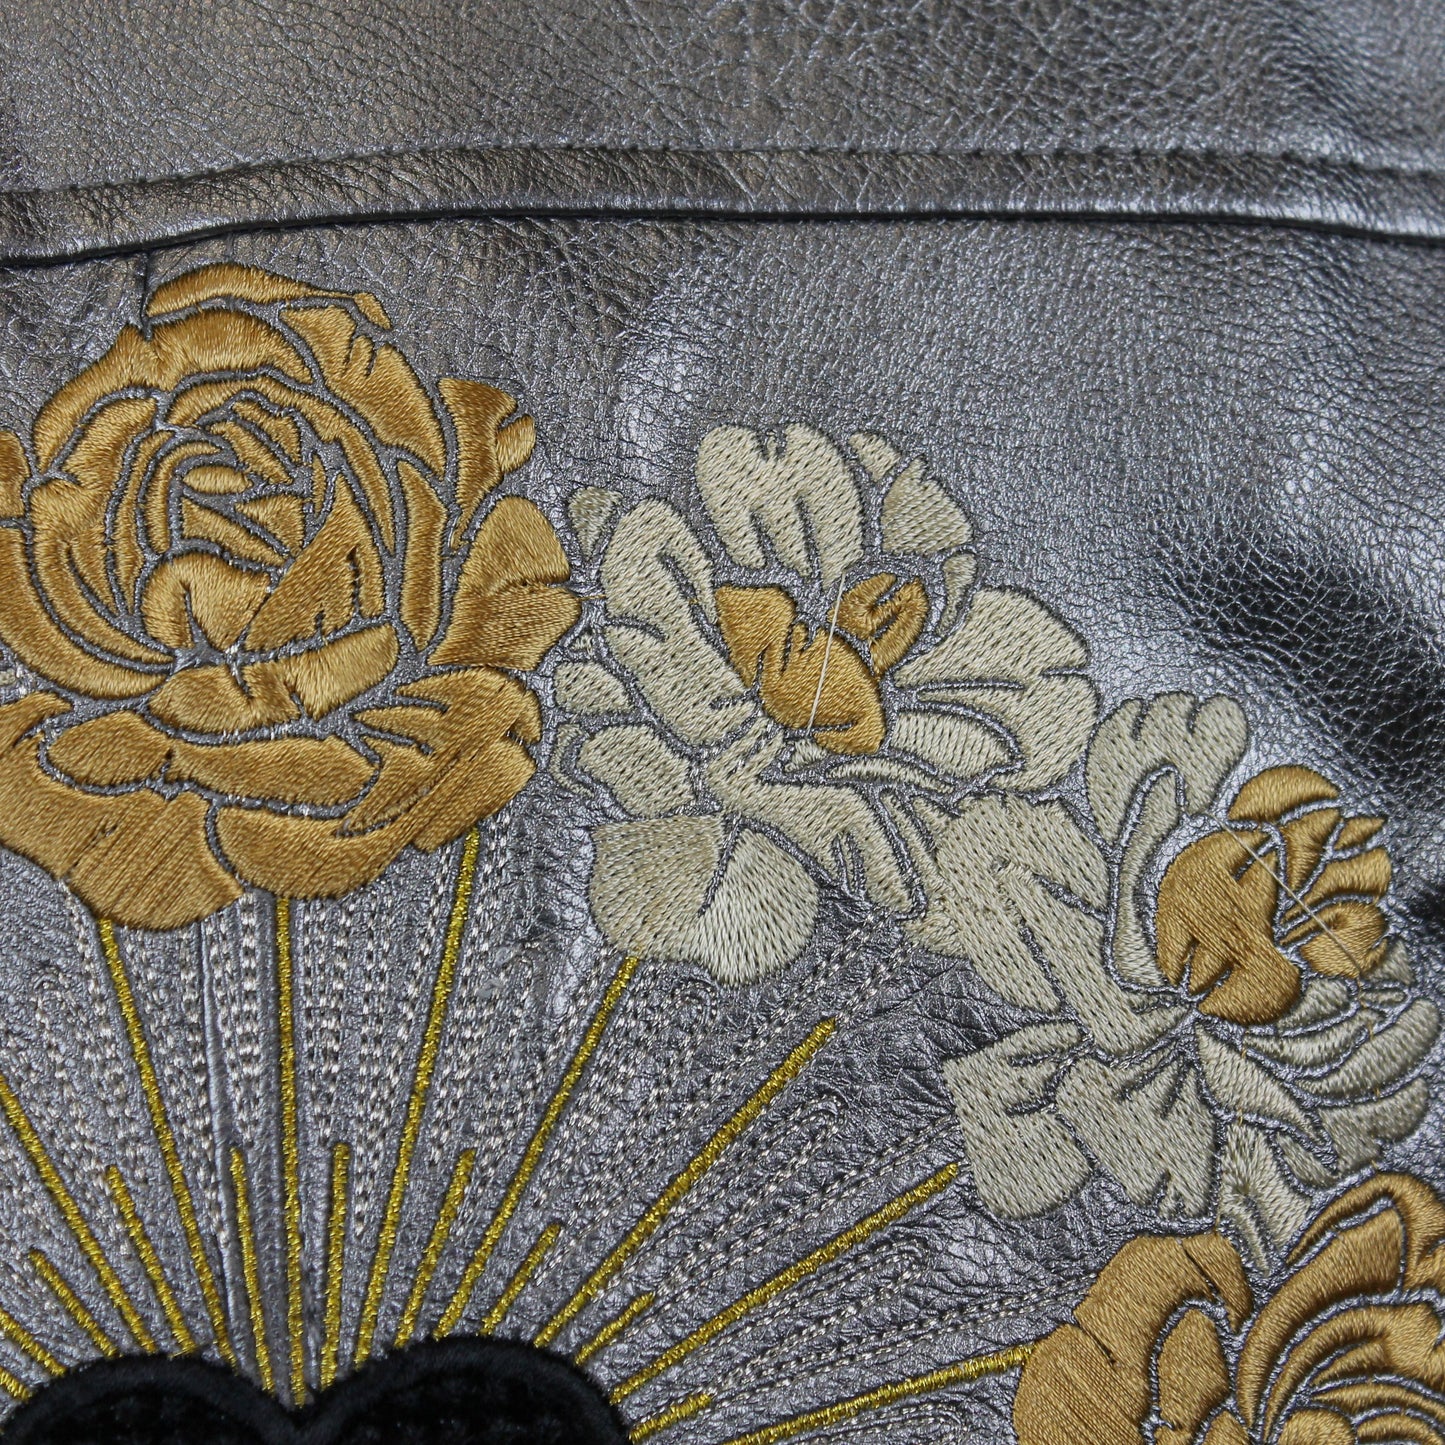 Golden Floral Black Heart Metallic Silver Faux Leather Embroidered Biker Jacket